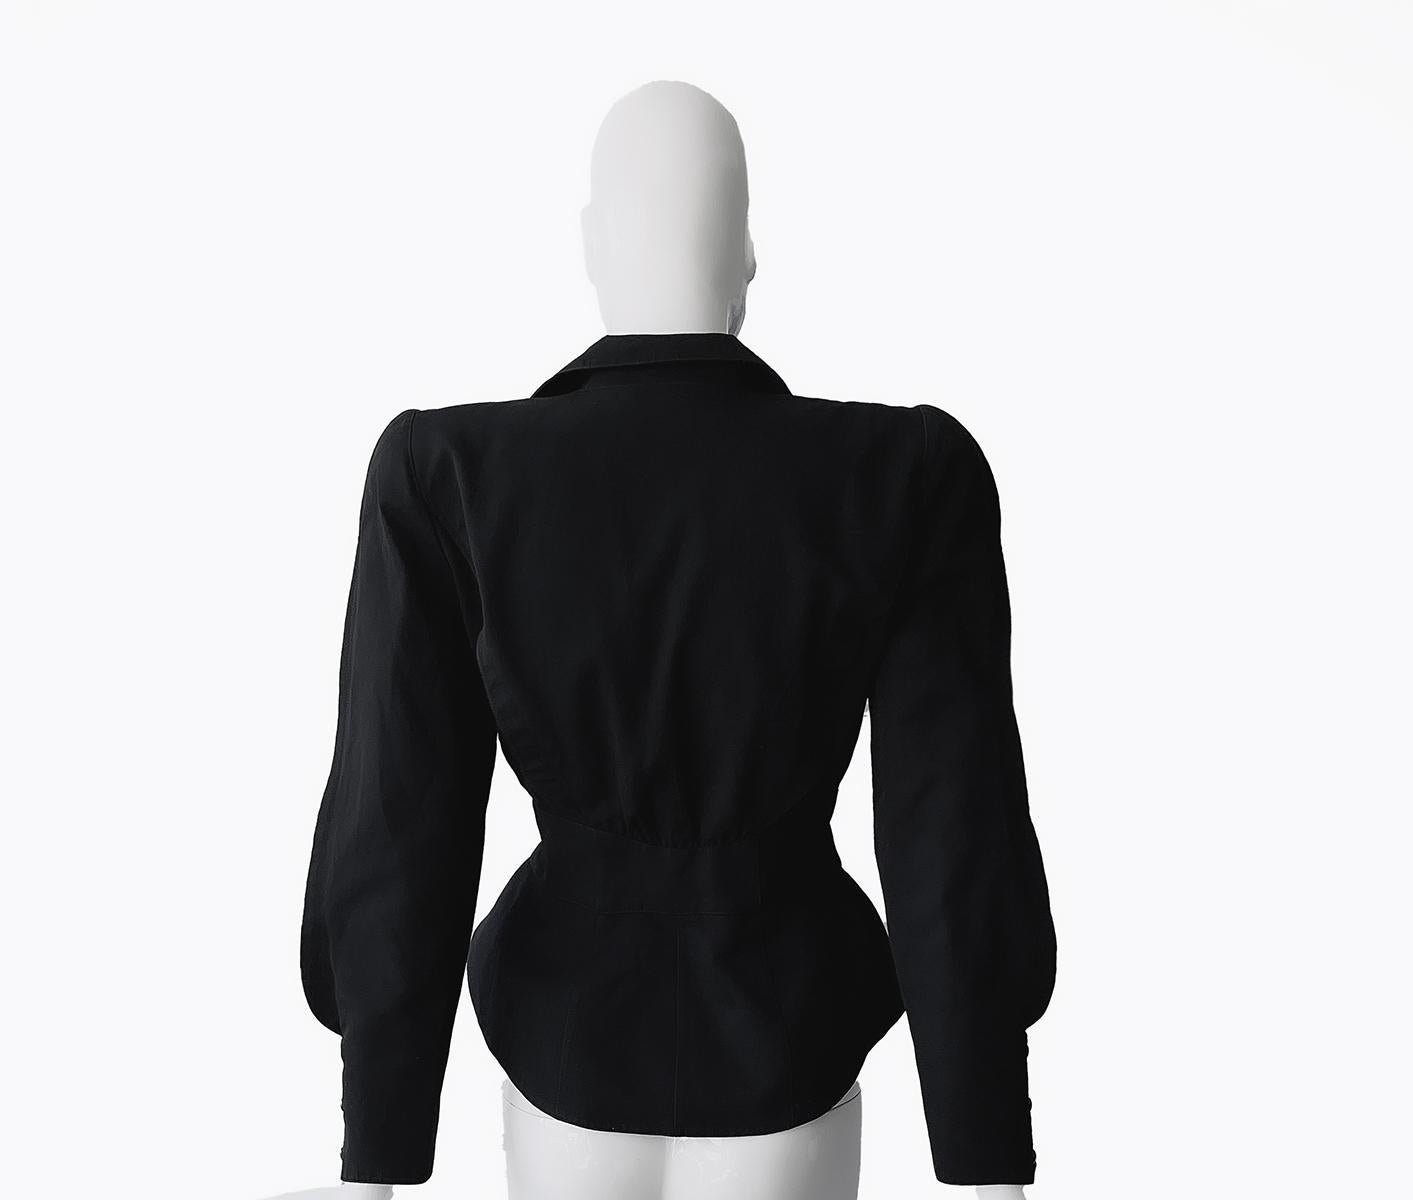 Thierry Mugler Black Sculptural Jacket Dramatic Collar Peplum For Sale 1